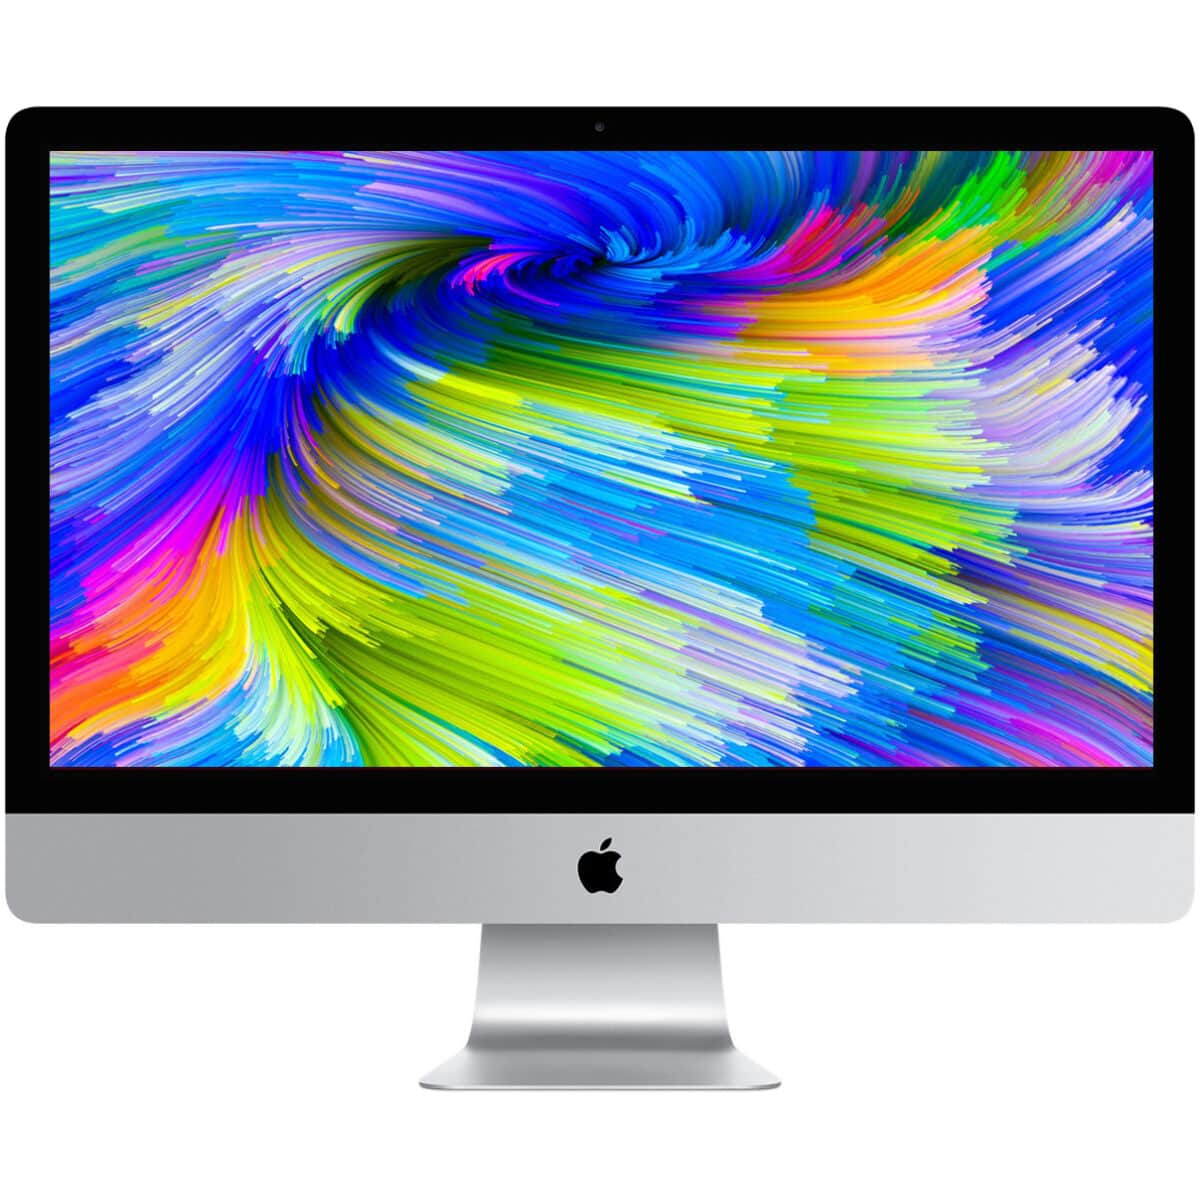 IMac 21.5" Slim Apple Core i5 1TB HDD 8GB RAM Powerful Mac OS Big Sur Refurbished Sale